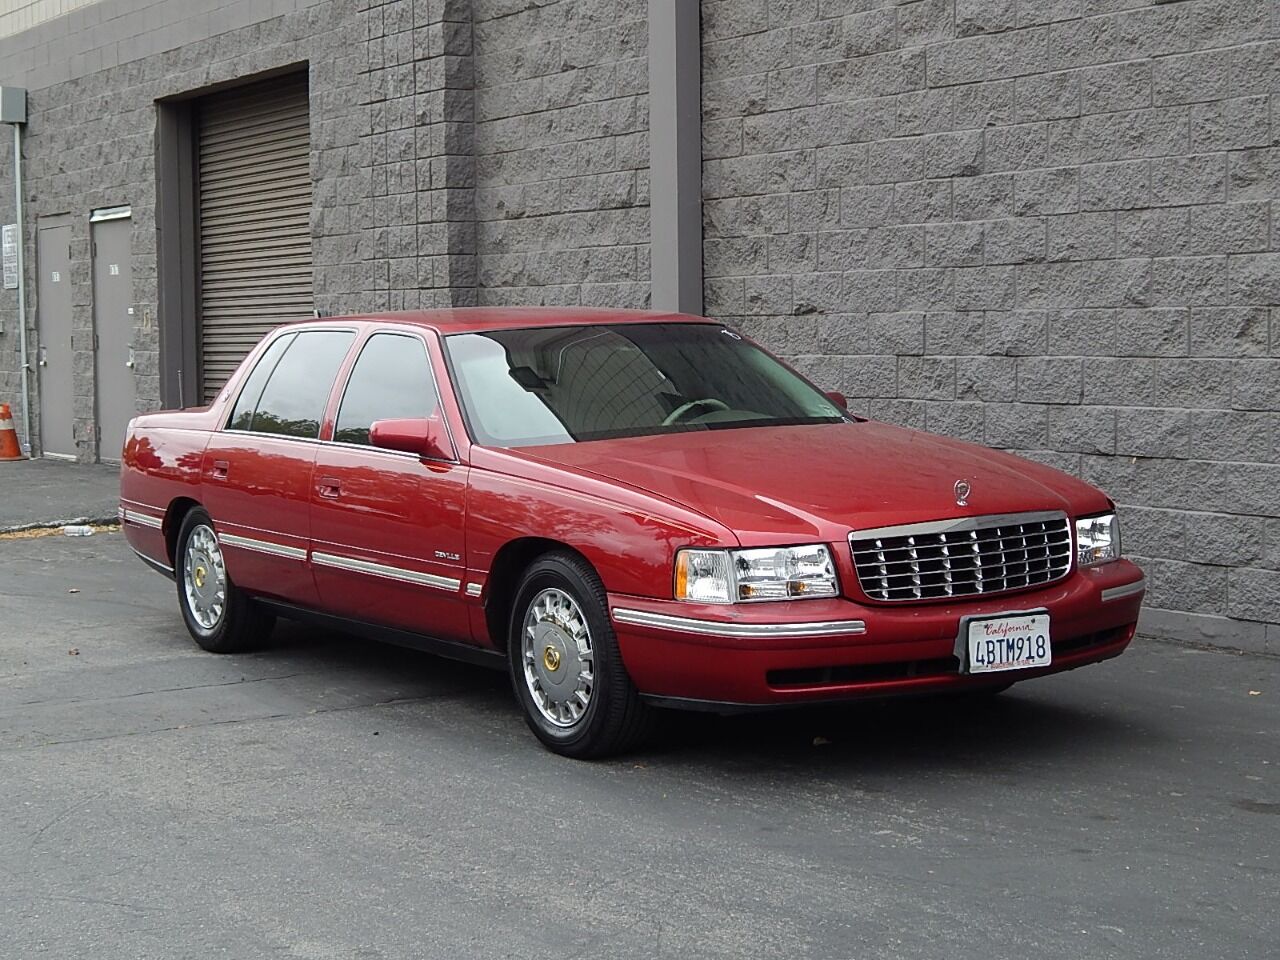 1998 Cadillac DeVille For Sale In Flagstaff, AZ - Carsforsale.com®